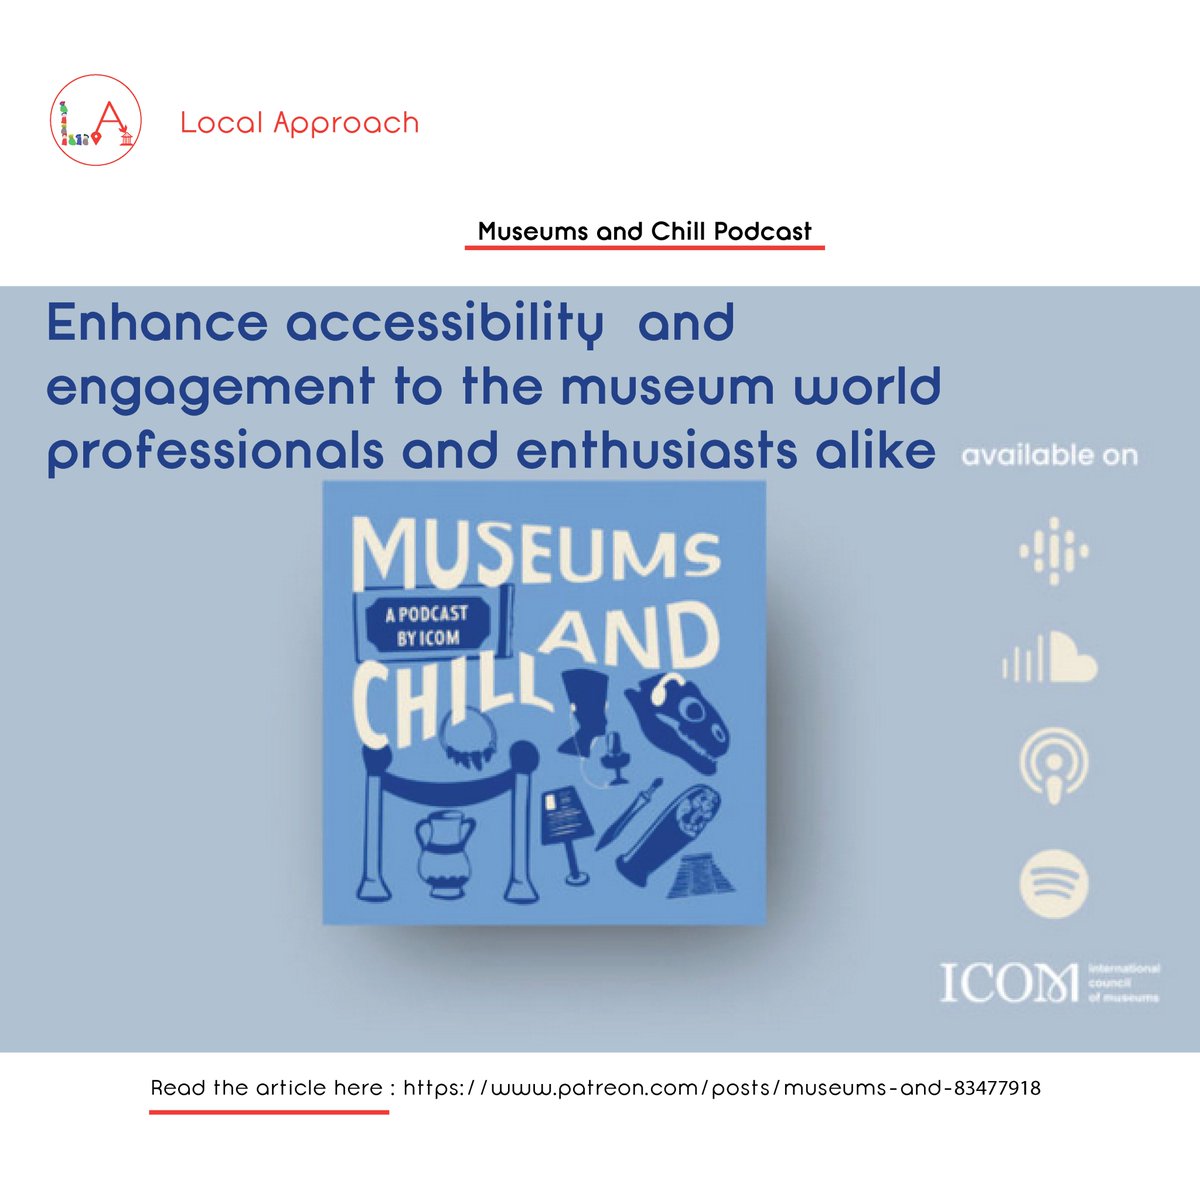 #Museums and #ChillPodcast

patreon.com/posts/museums-…

#MuseumsandChill #ICOMVoicespodcast #museumworld #podcast #culturalmanagement

@IcomOfficiel